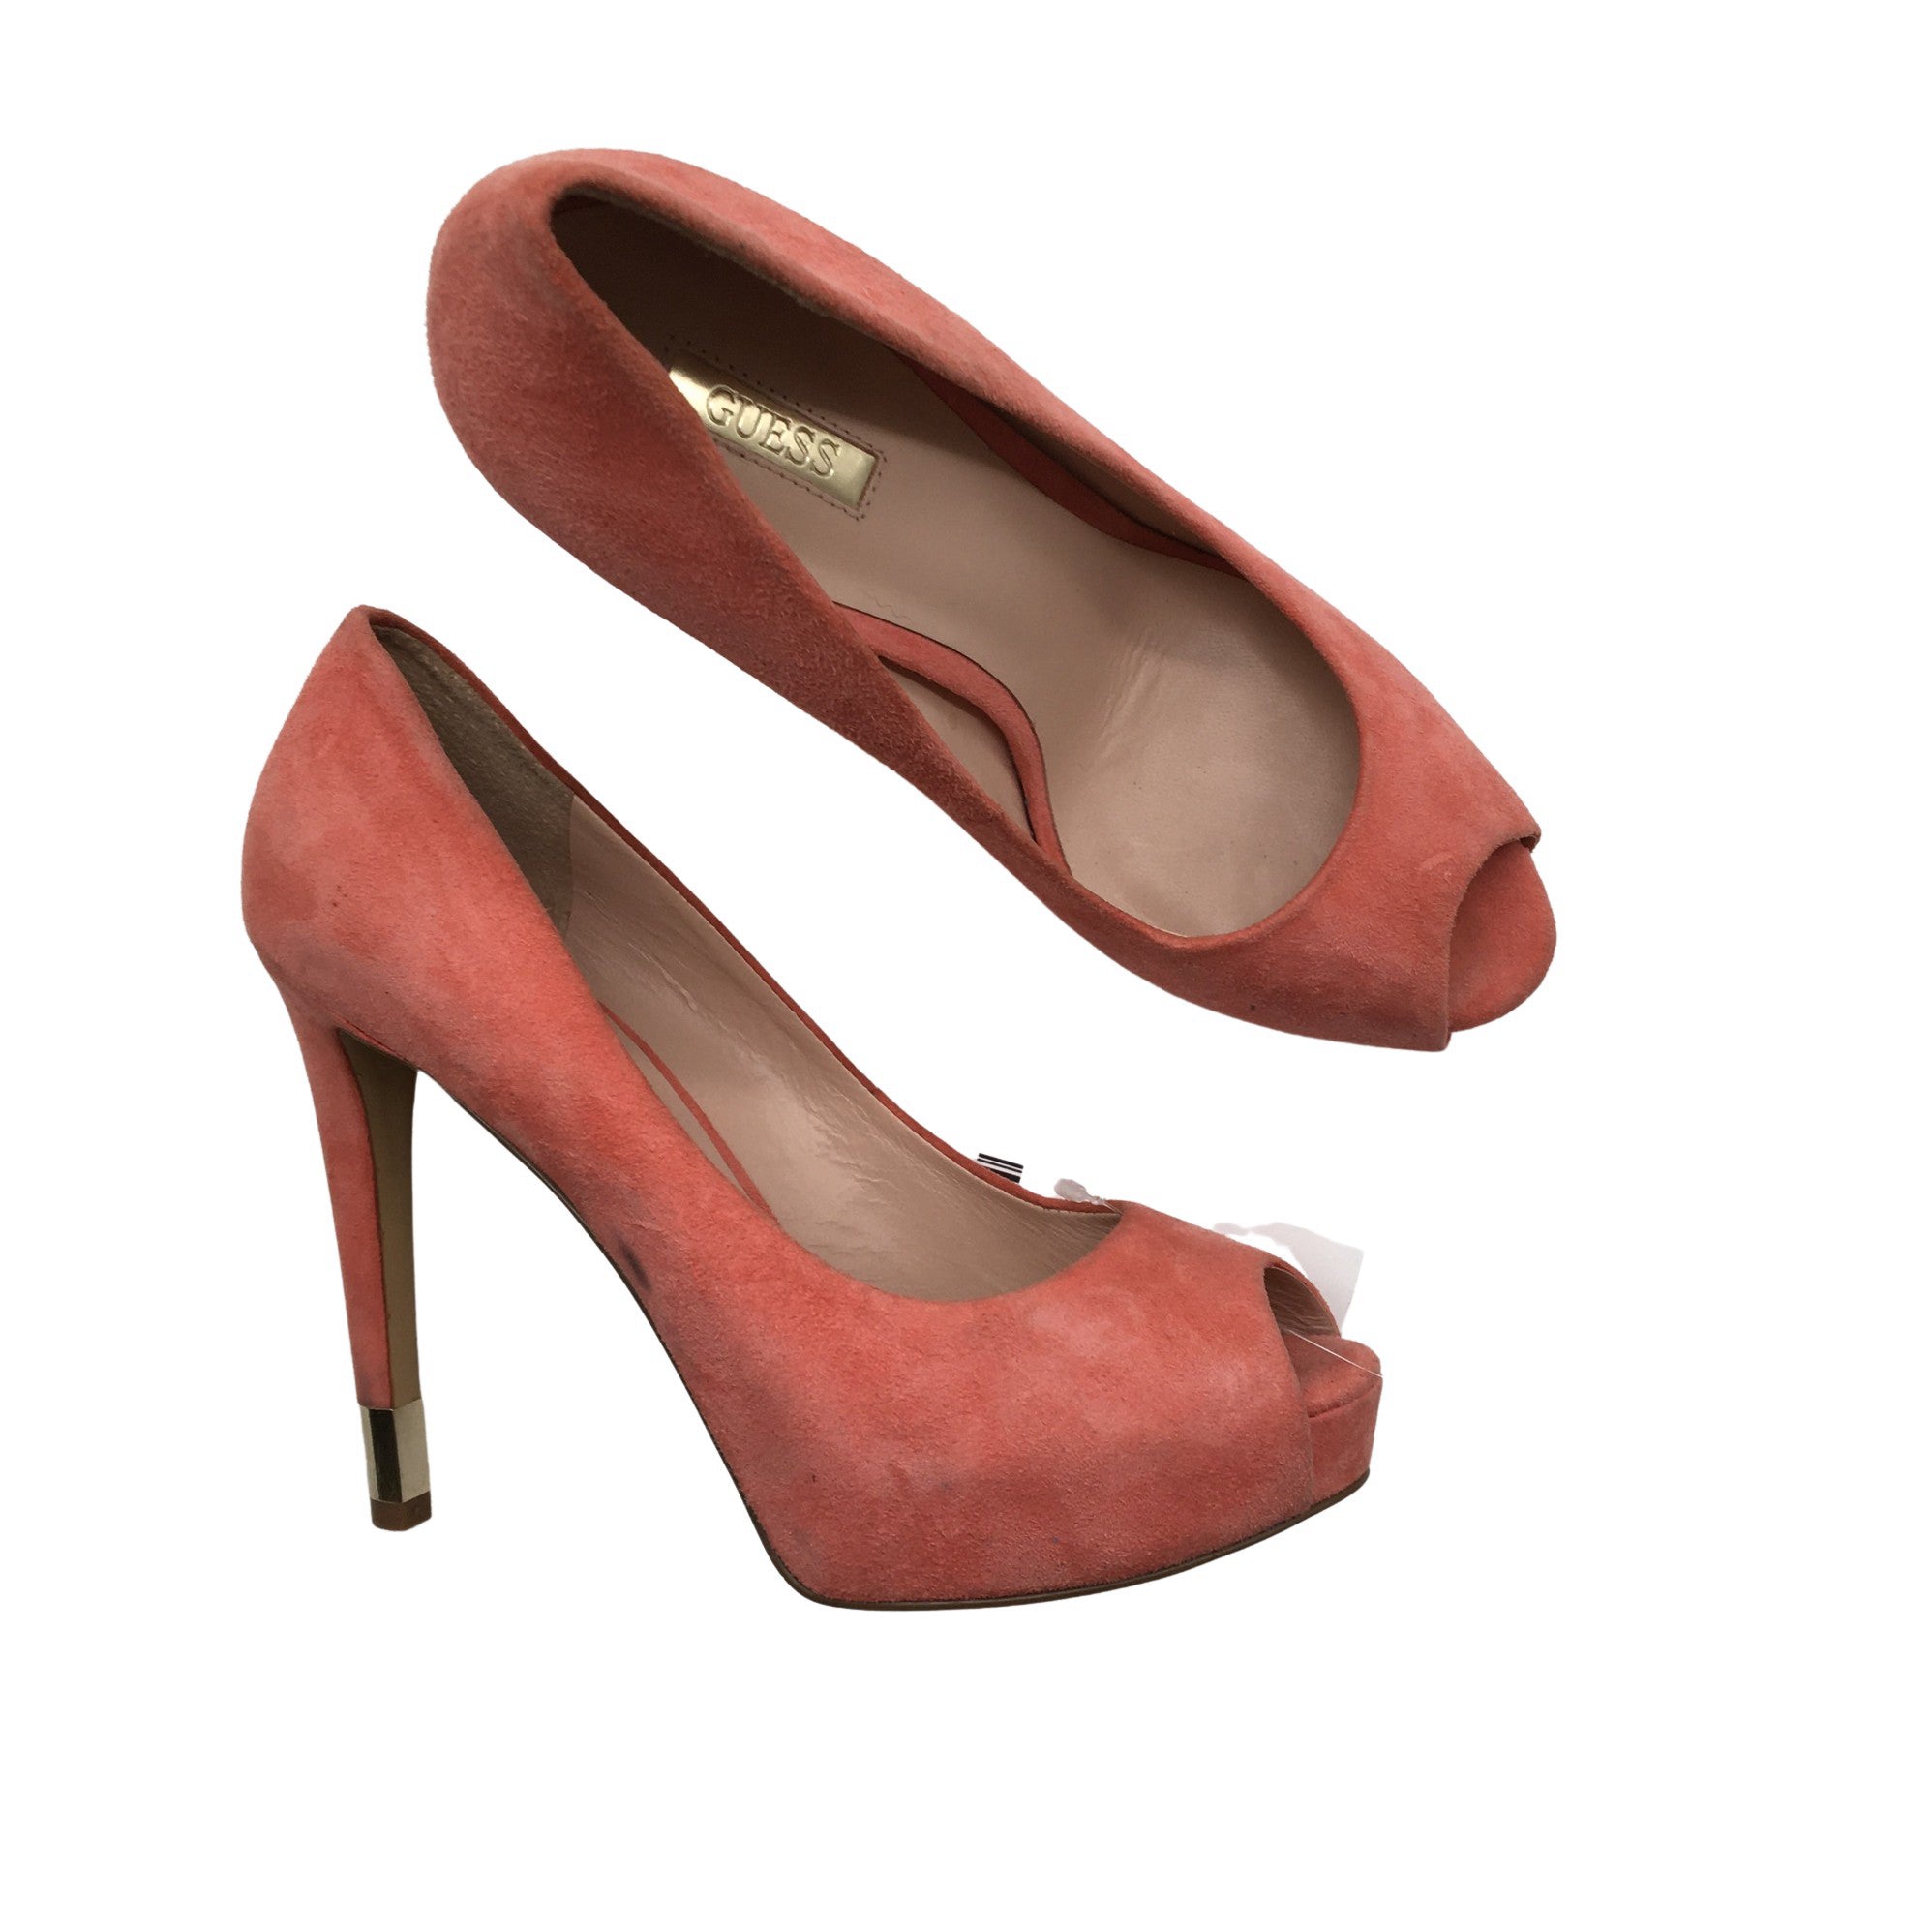 Bevestigen aan lippen Voorafgaan Women's Guess Evening high heels, size 39 (Light red) | Emmy